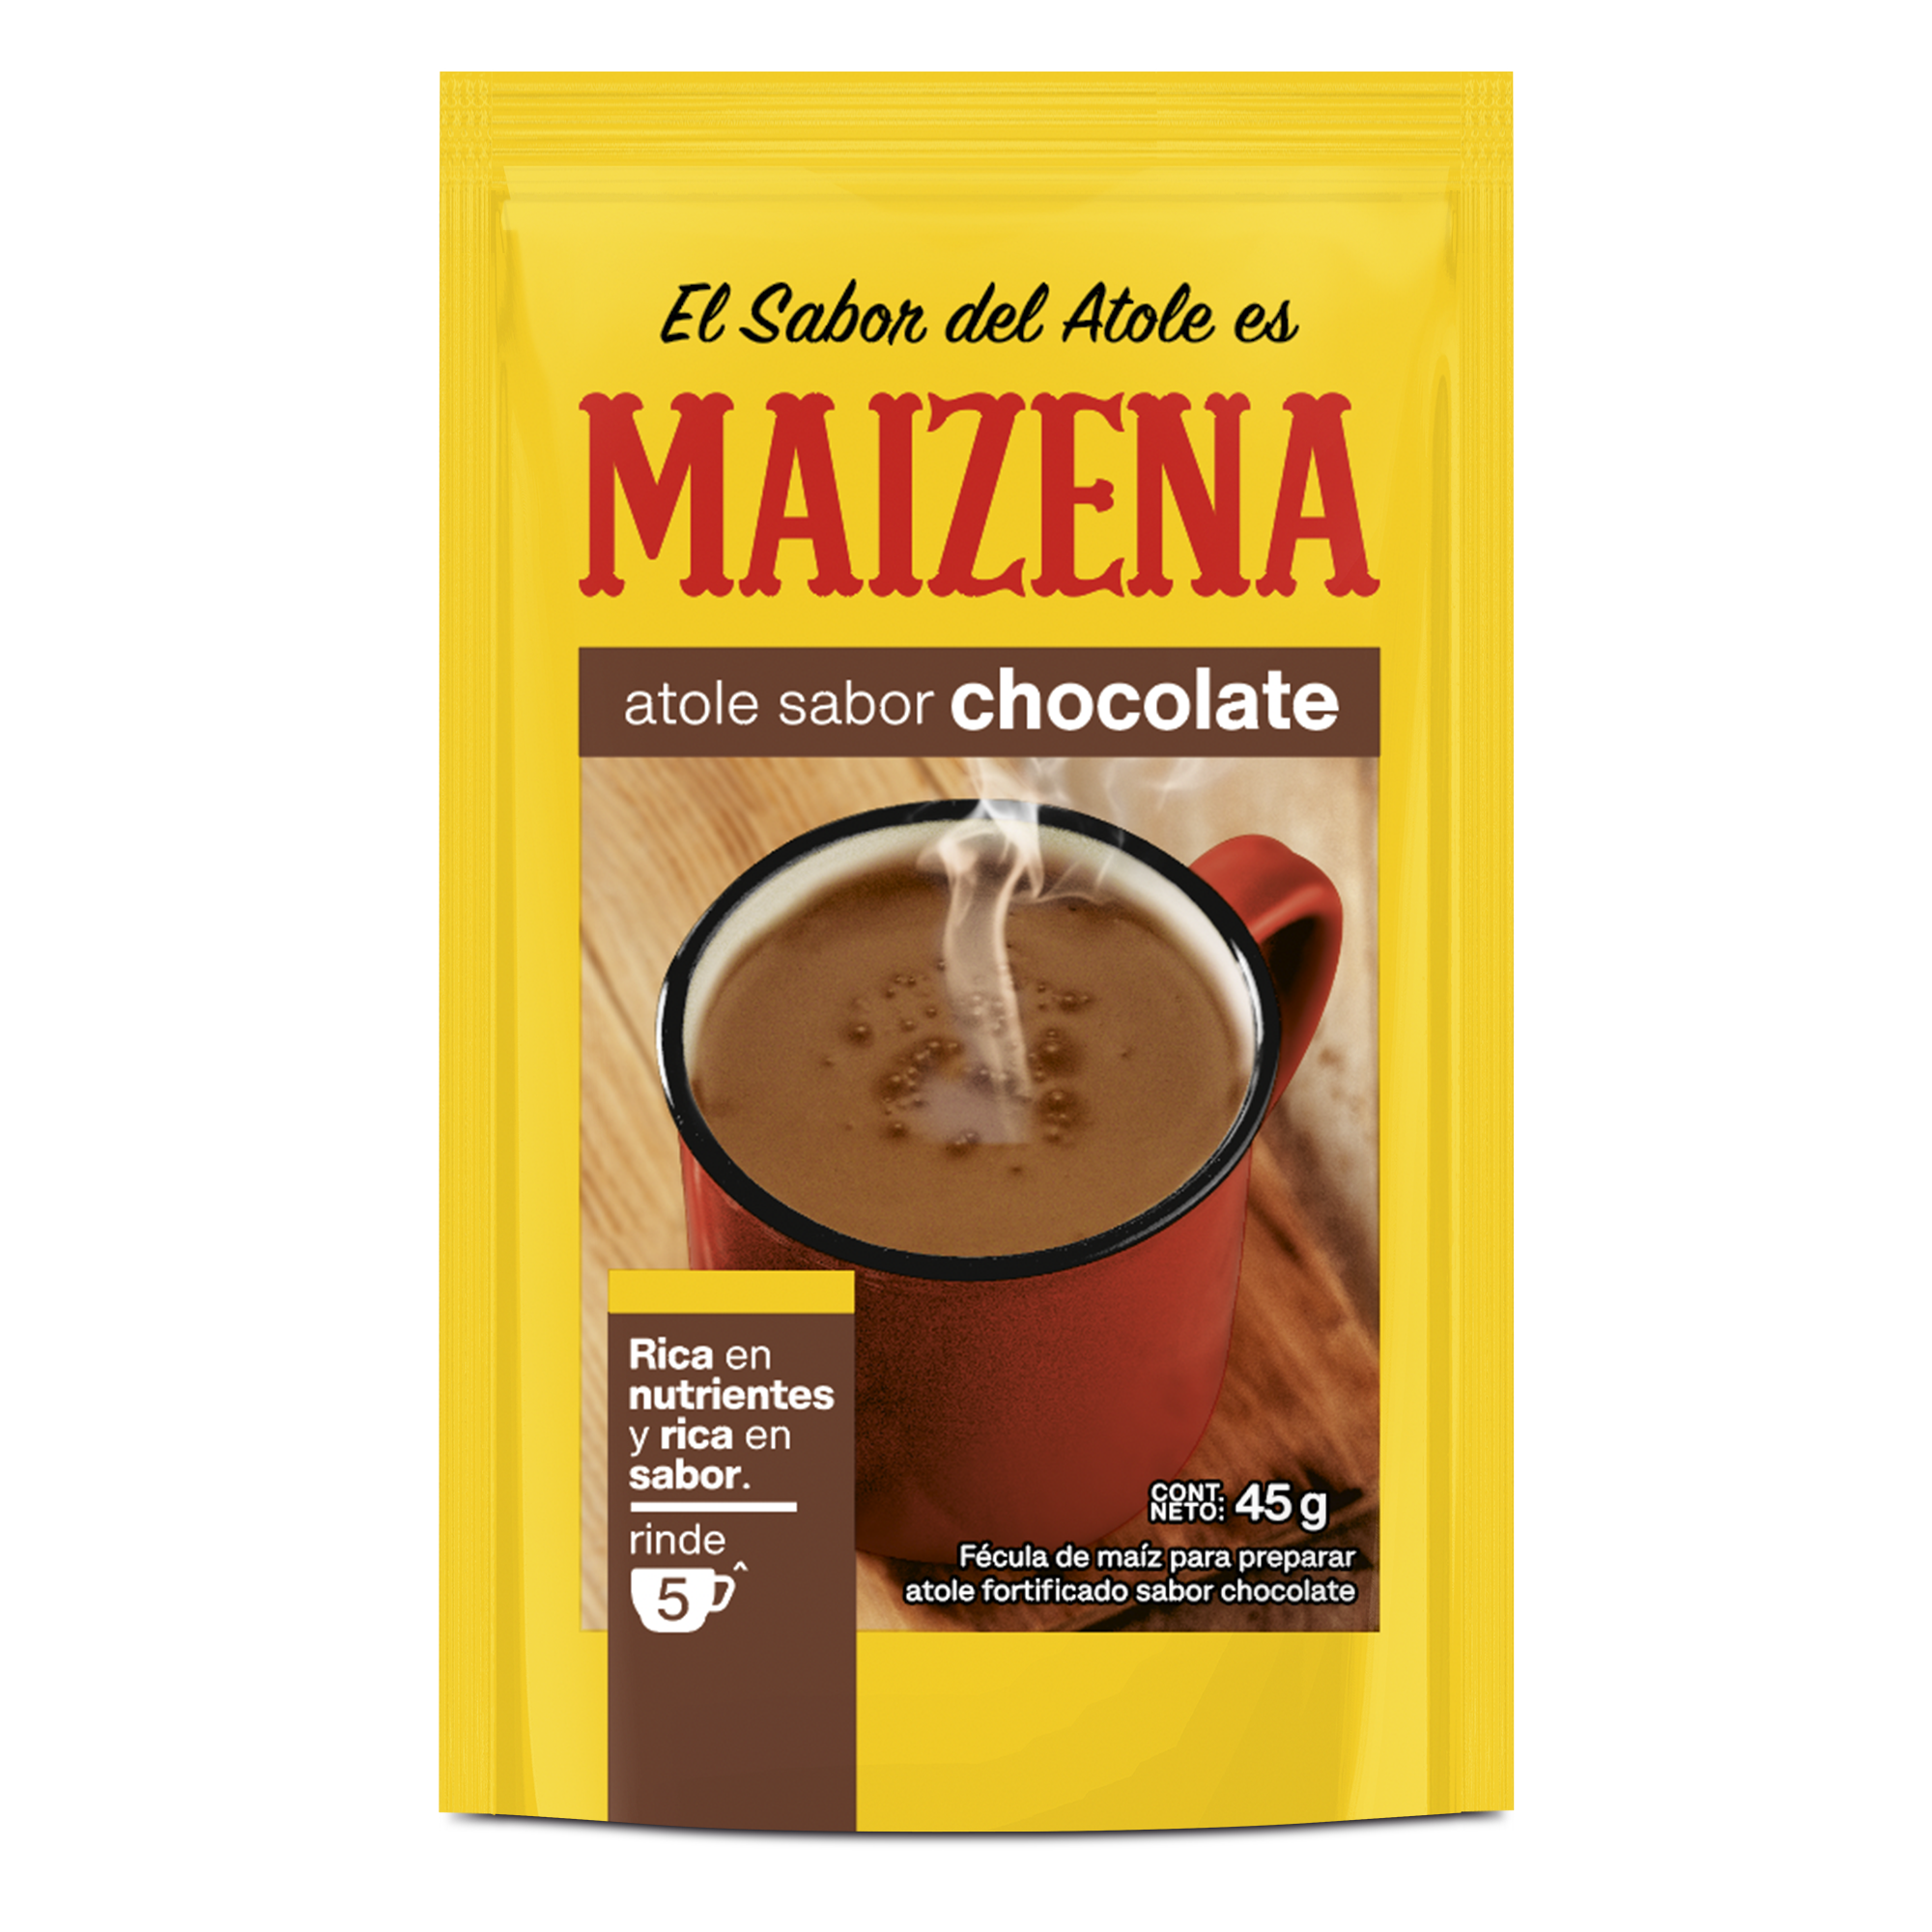 Atole Sabor Chocolate Maizena ®